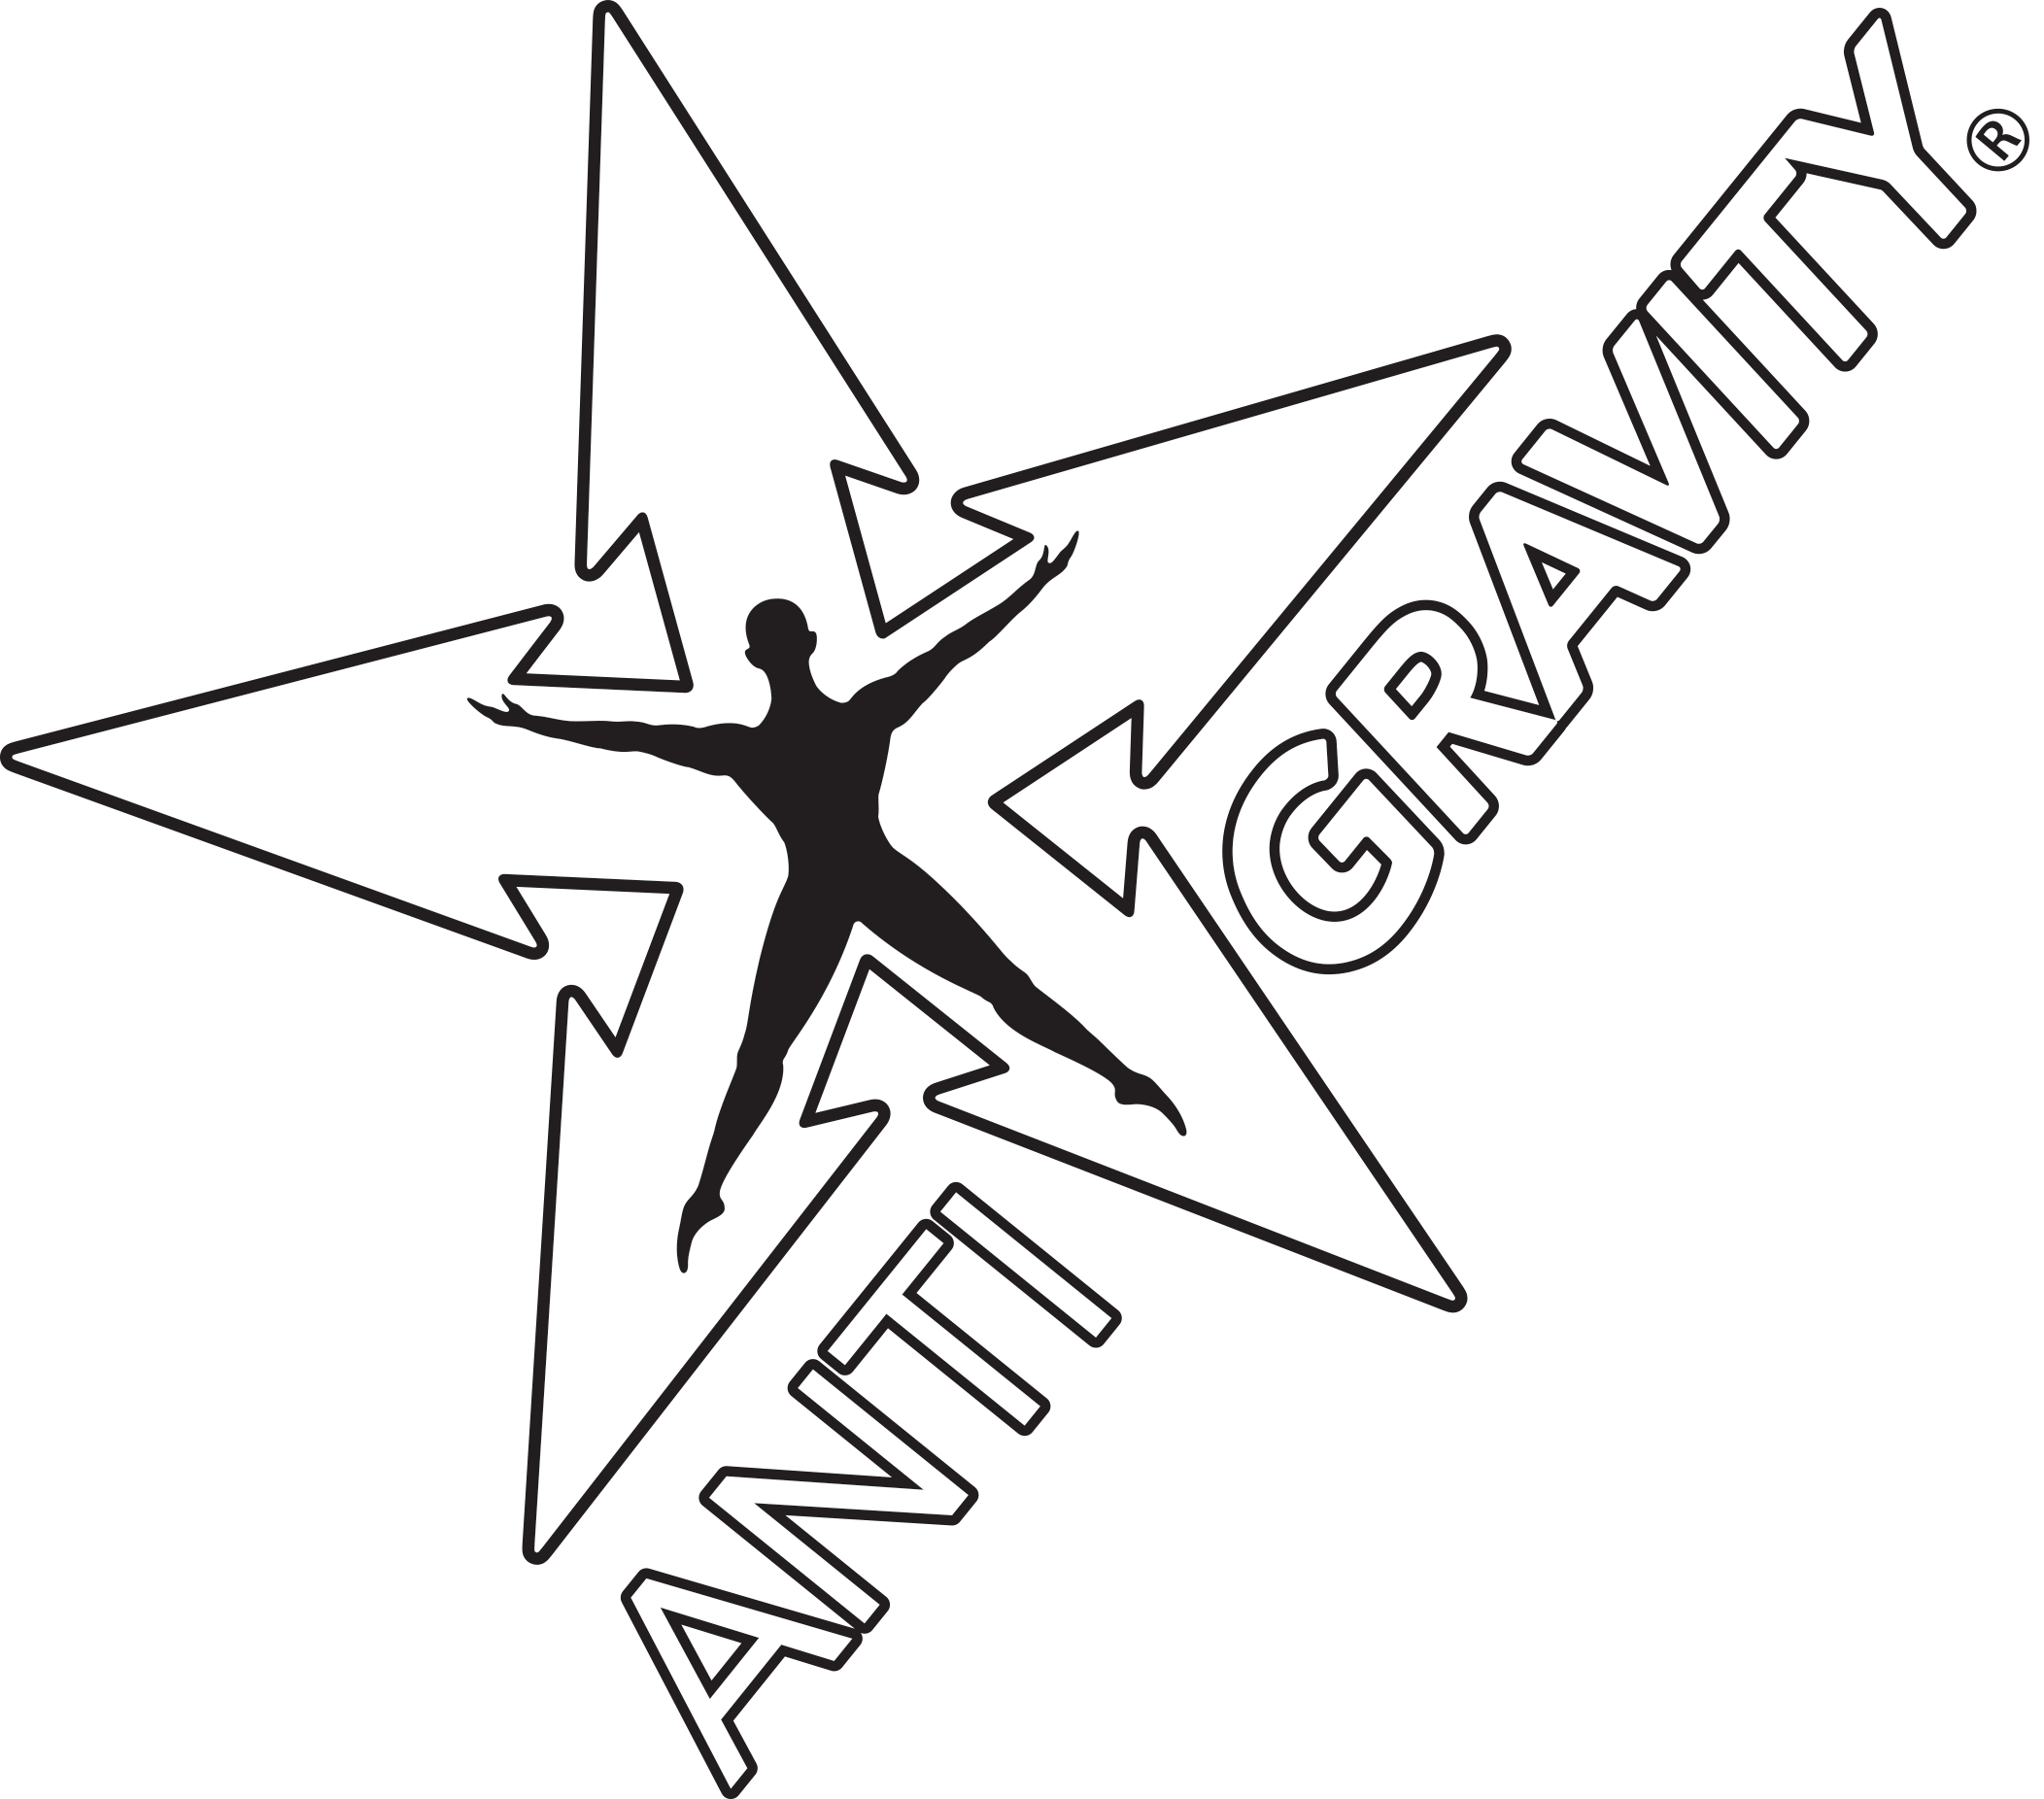 AntiGravity